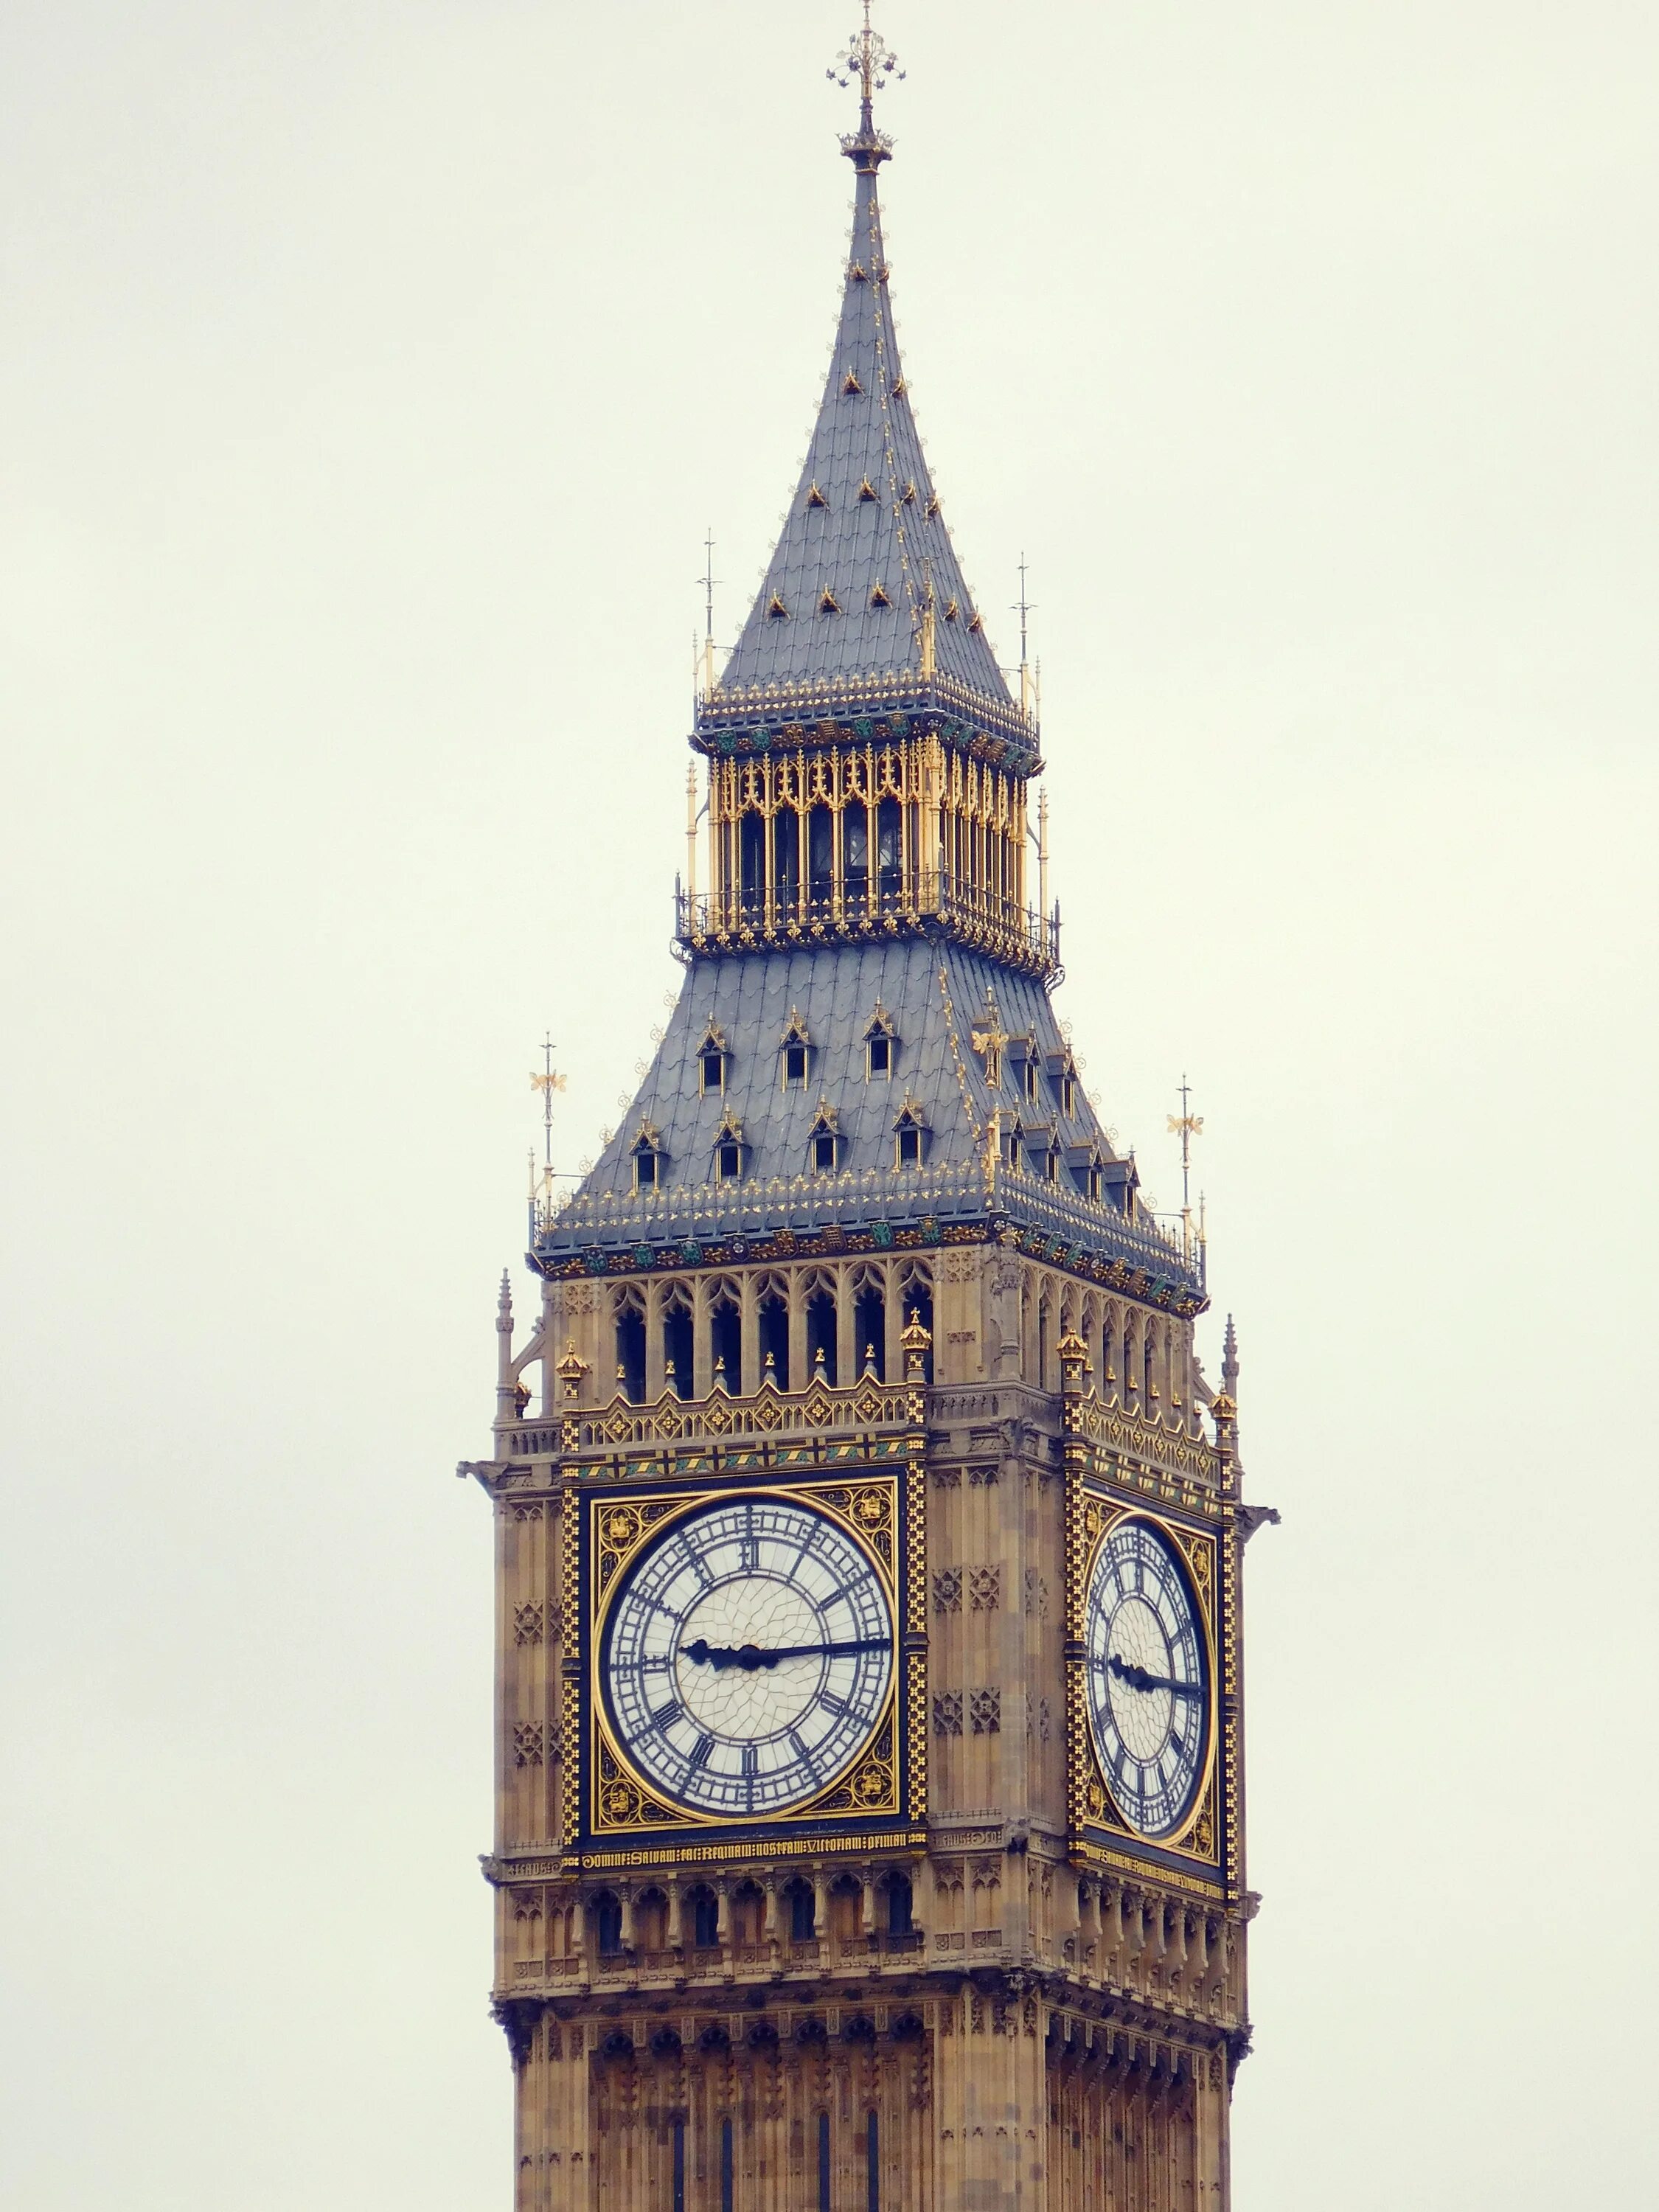 Watching britain. Биг-Бен (башня Елизаветы). Башня Биг Бен в Великобритании. Английские часы Биг Бен. Британии башня Биг-Бен символ.